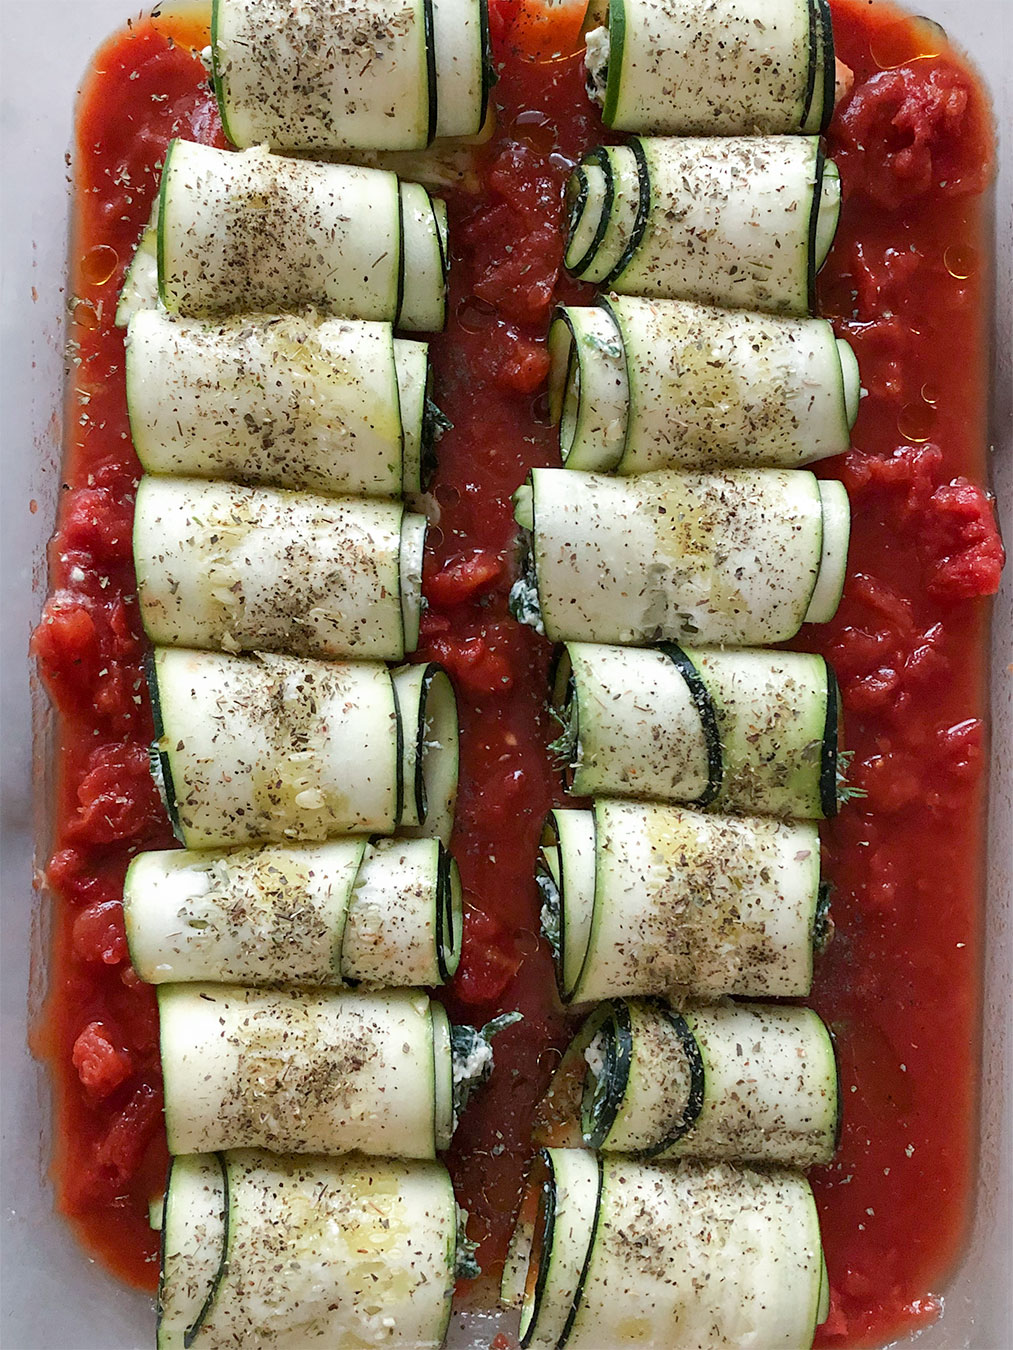 Spanakopita Stuffed Zucchini Roll-Ups - Heart Healthy Greek